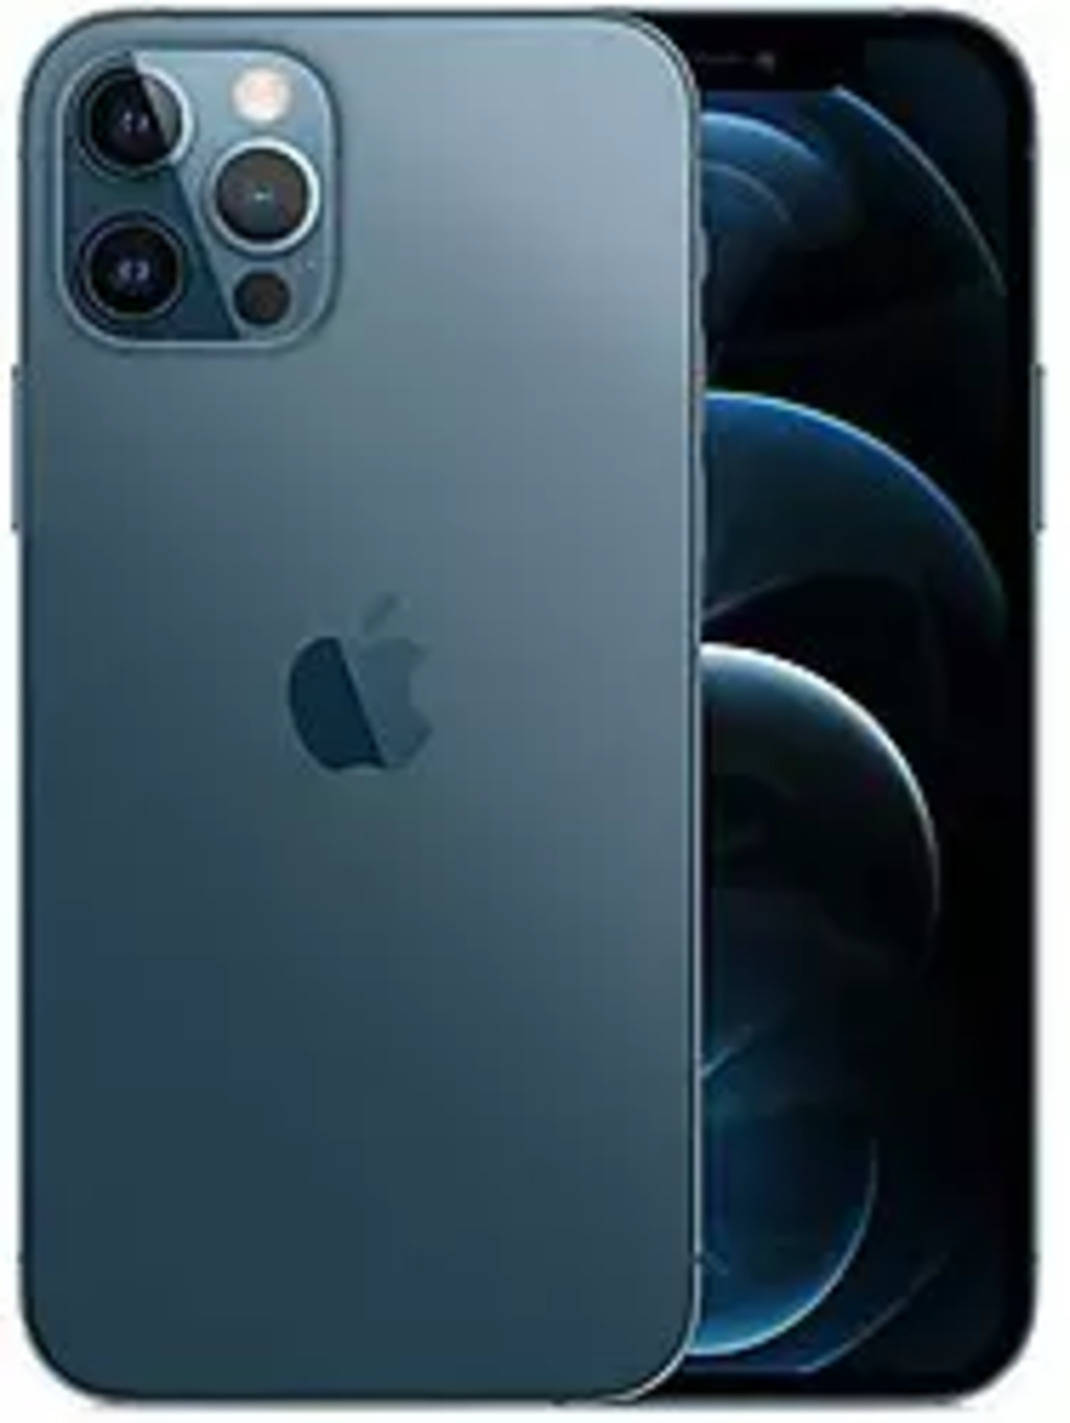 Compare Apple Iphone 12 Pro Vs Apple Iphone 8 Plus Price Specs Review Gadgets Now